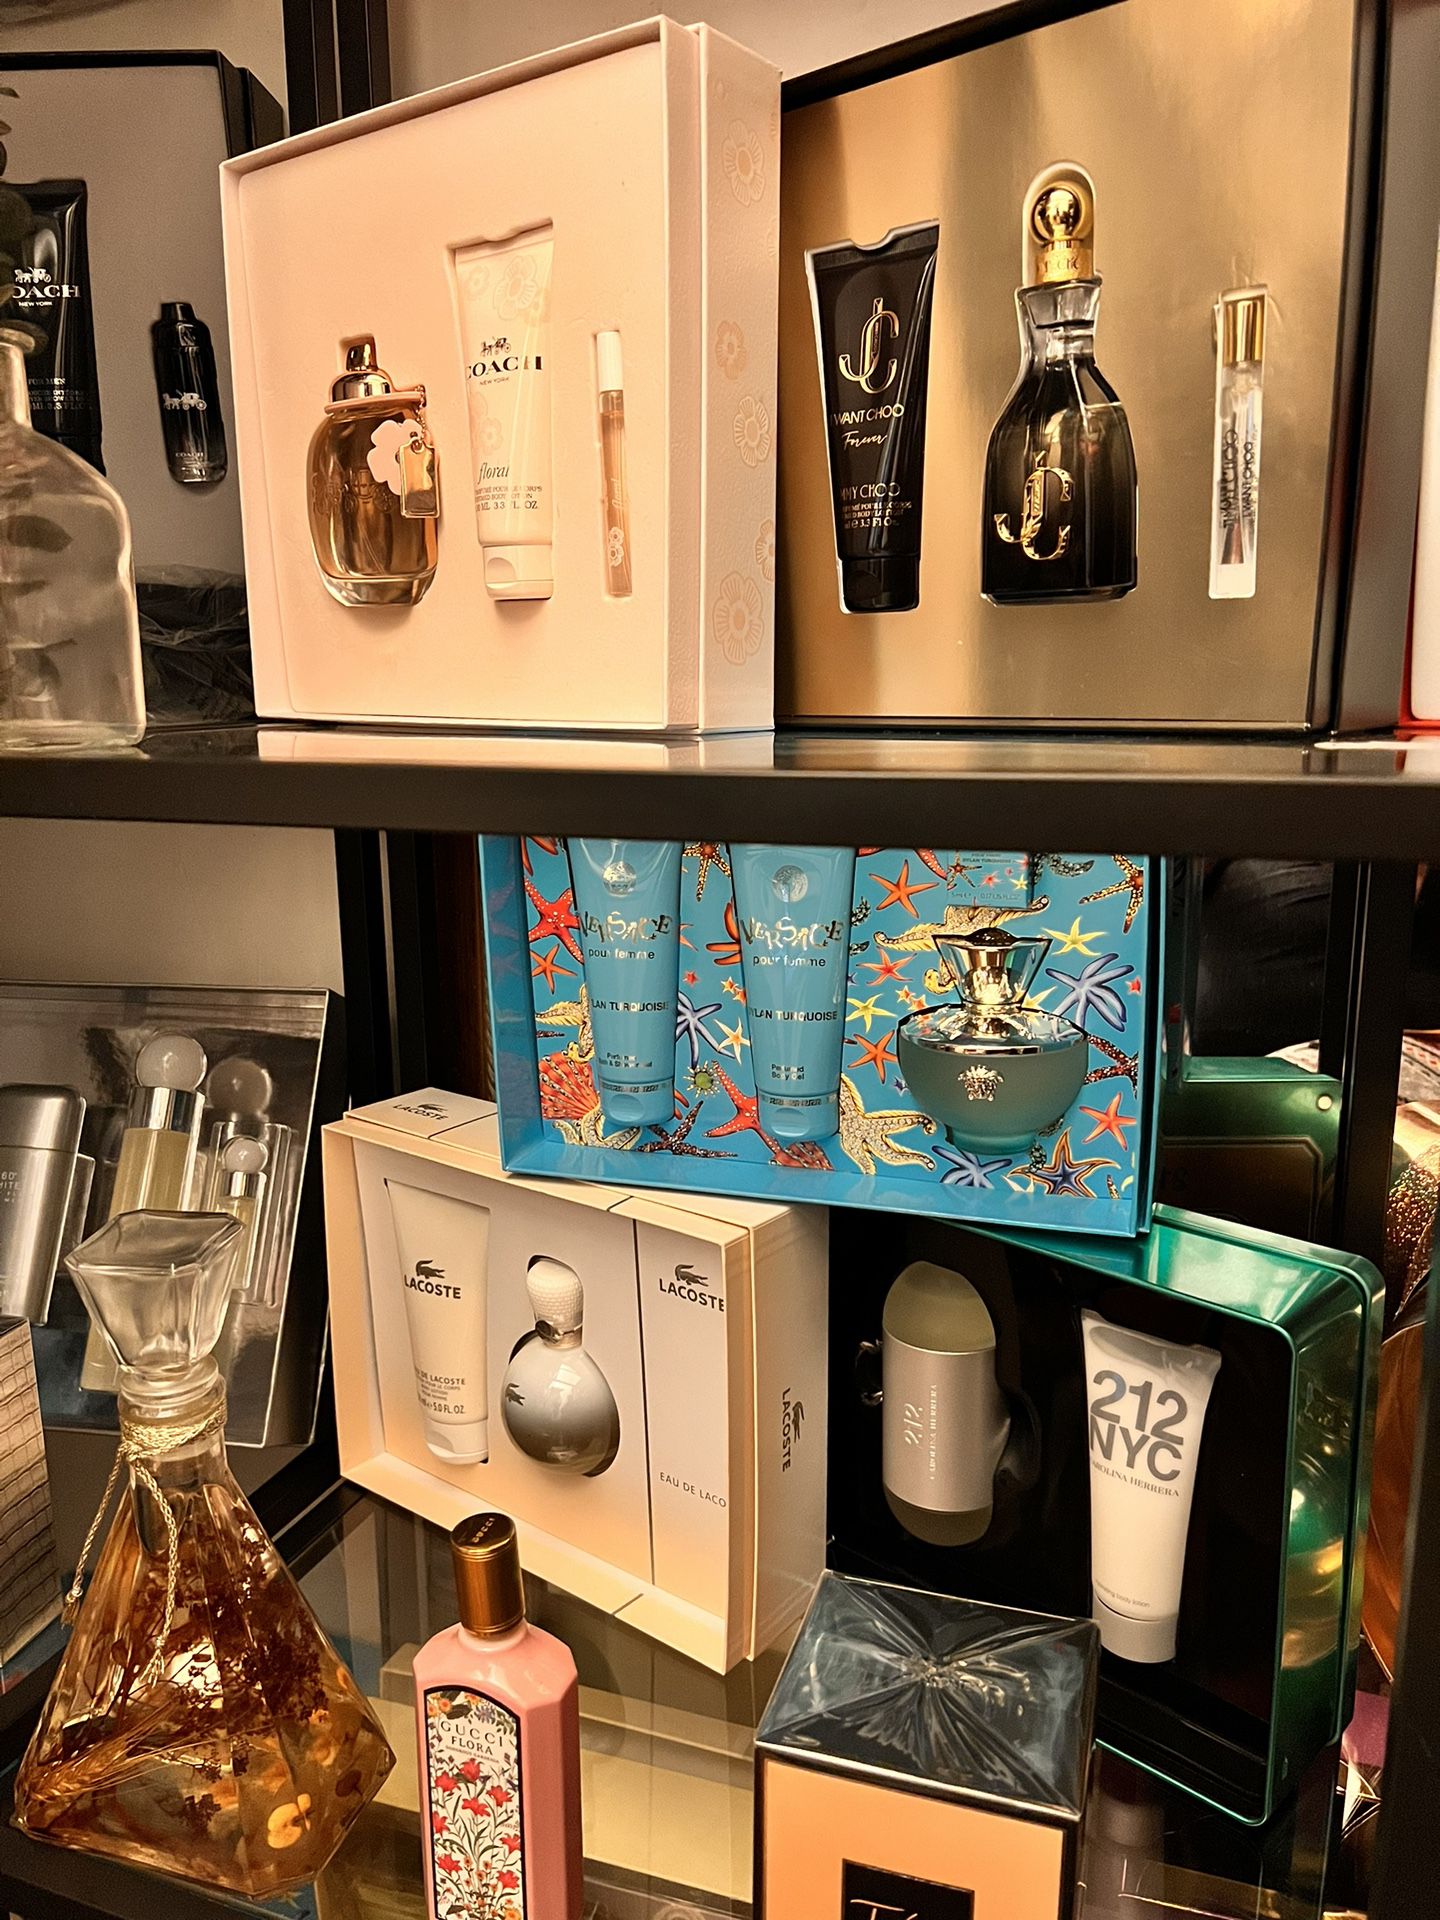 Perfumes 💯 Originales 